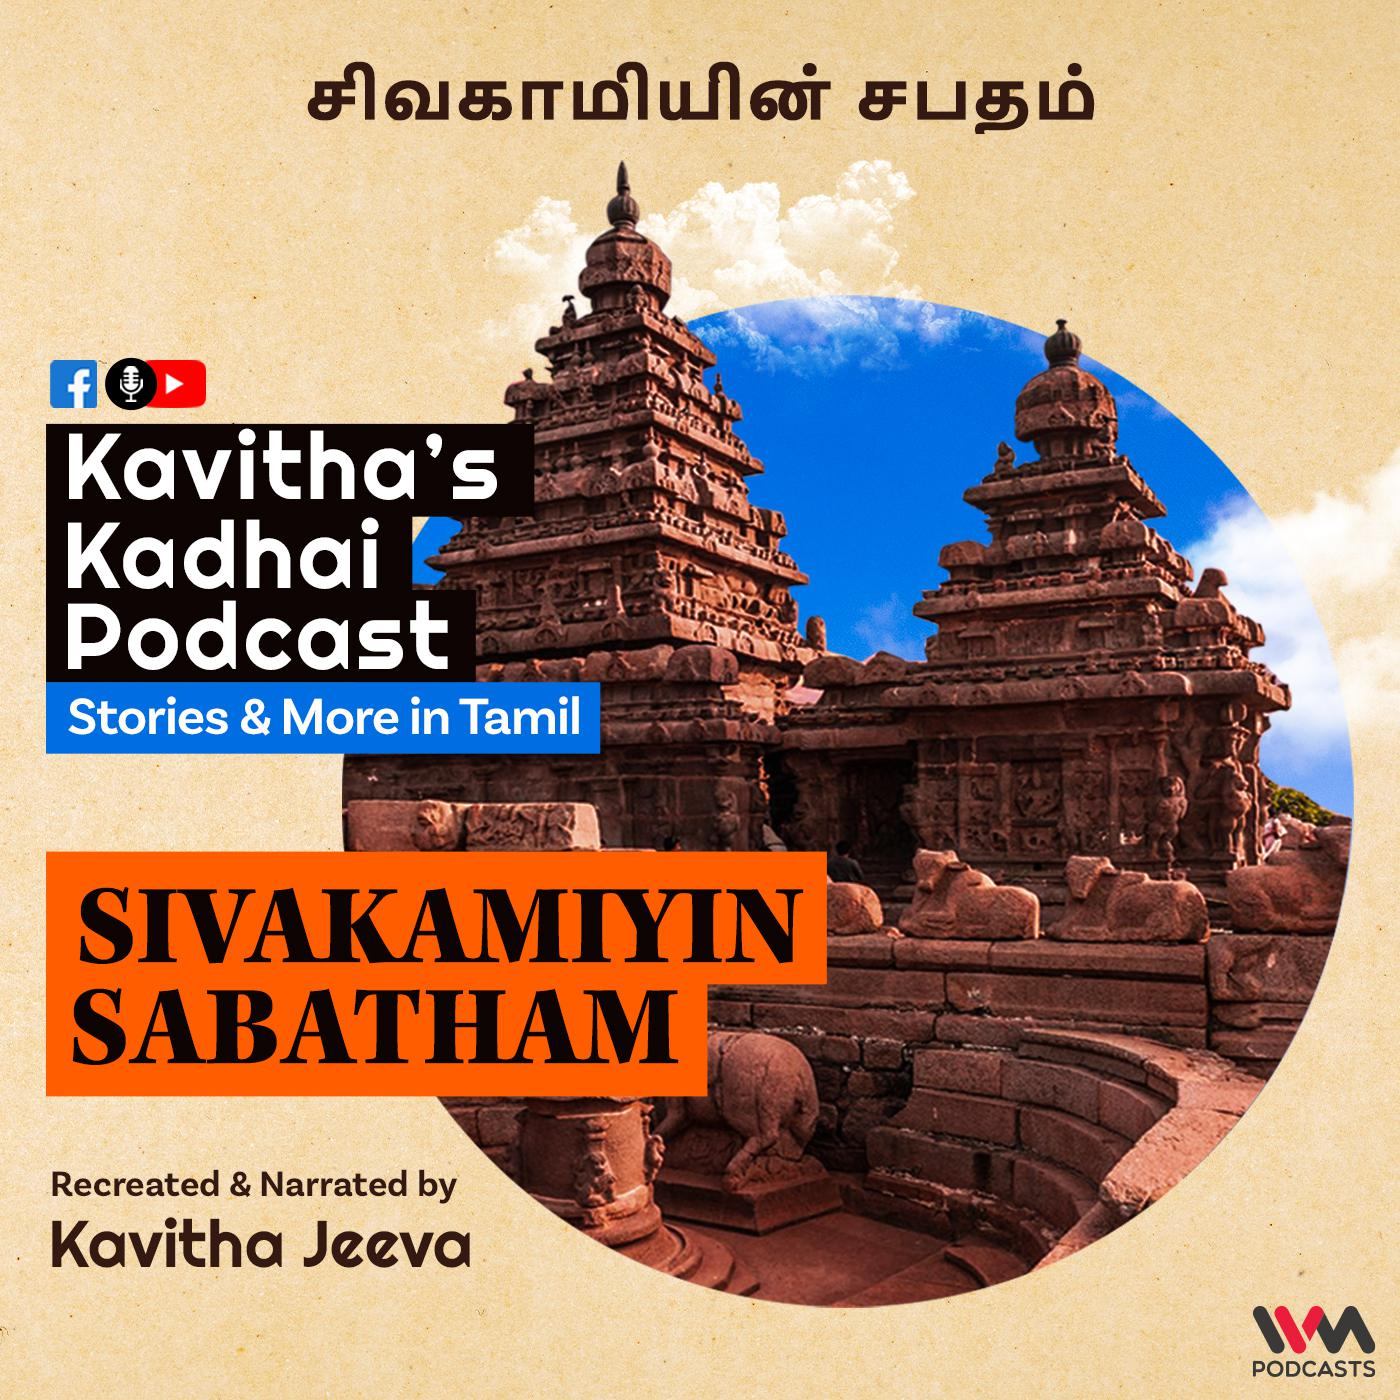 KadhaiPodcast's Sivakamiyin Sabatham with Kavitha Jeeva - Episode #128